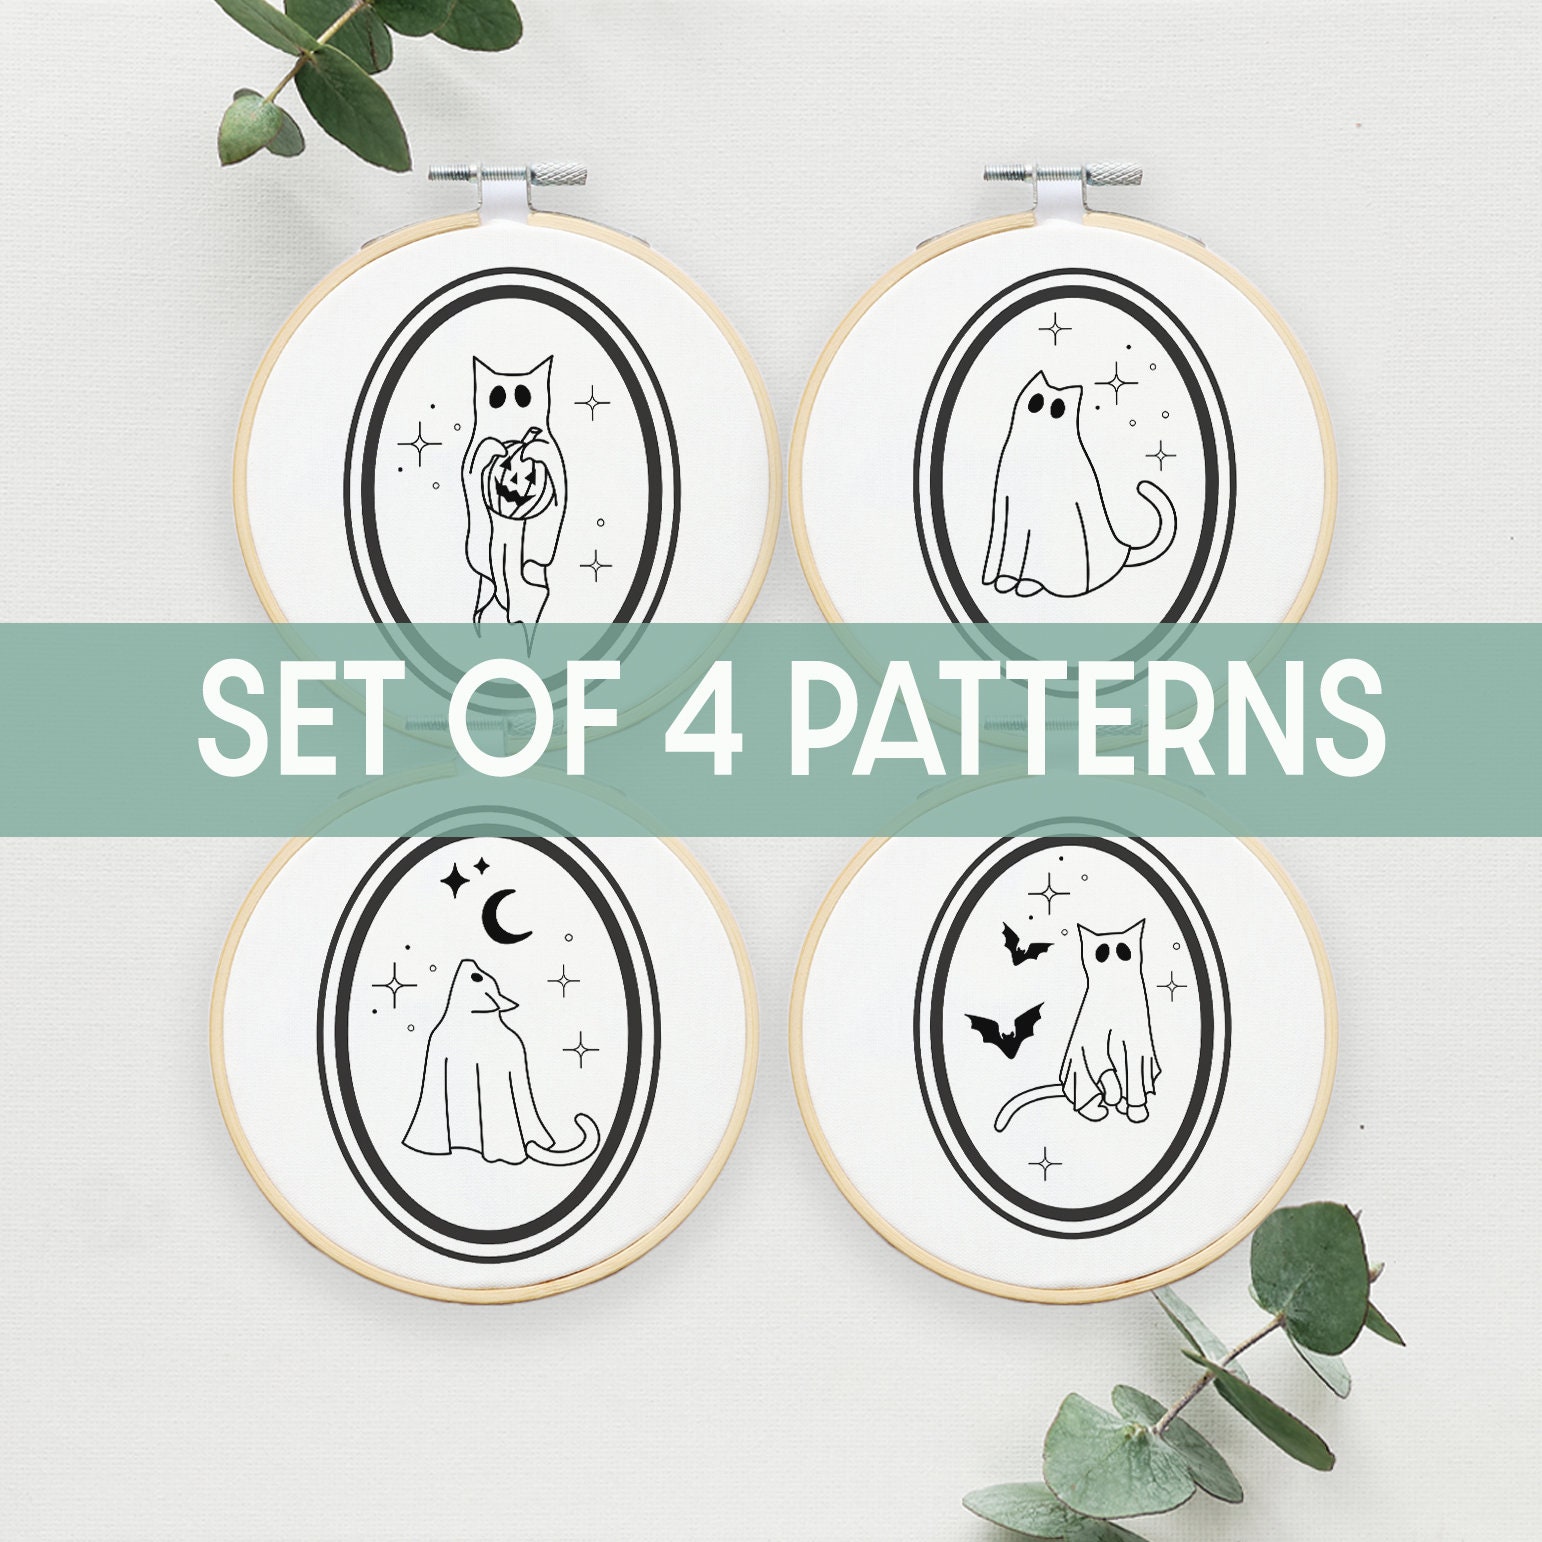 Set of 6 Sashiko Style Patterns, Nature Design, Hand Embroidery